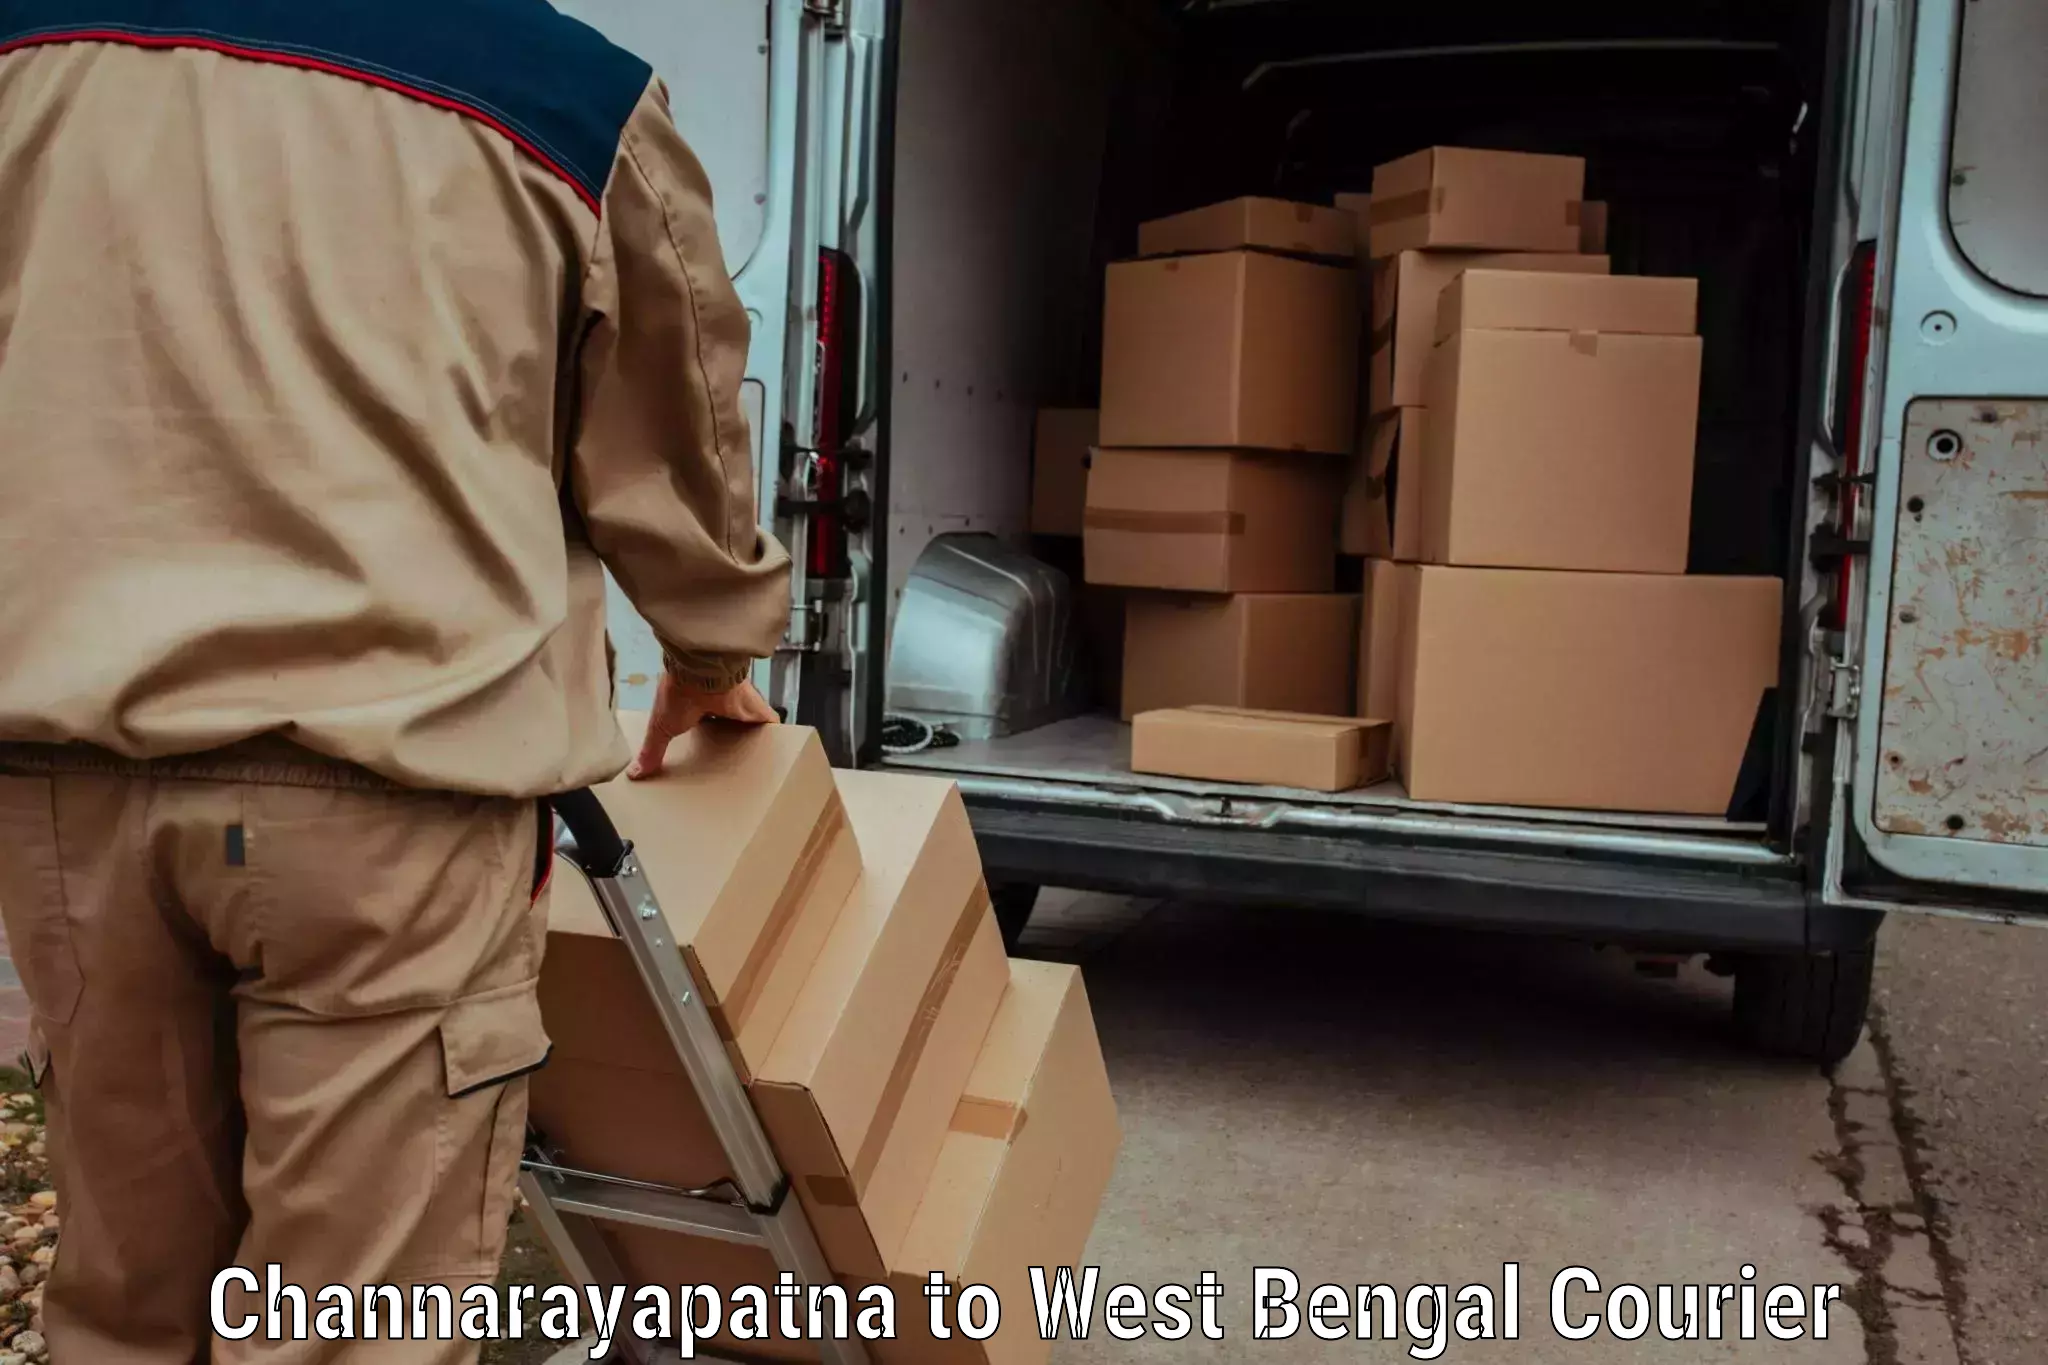 Logistics management in Channarayapatna to Kolkata